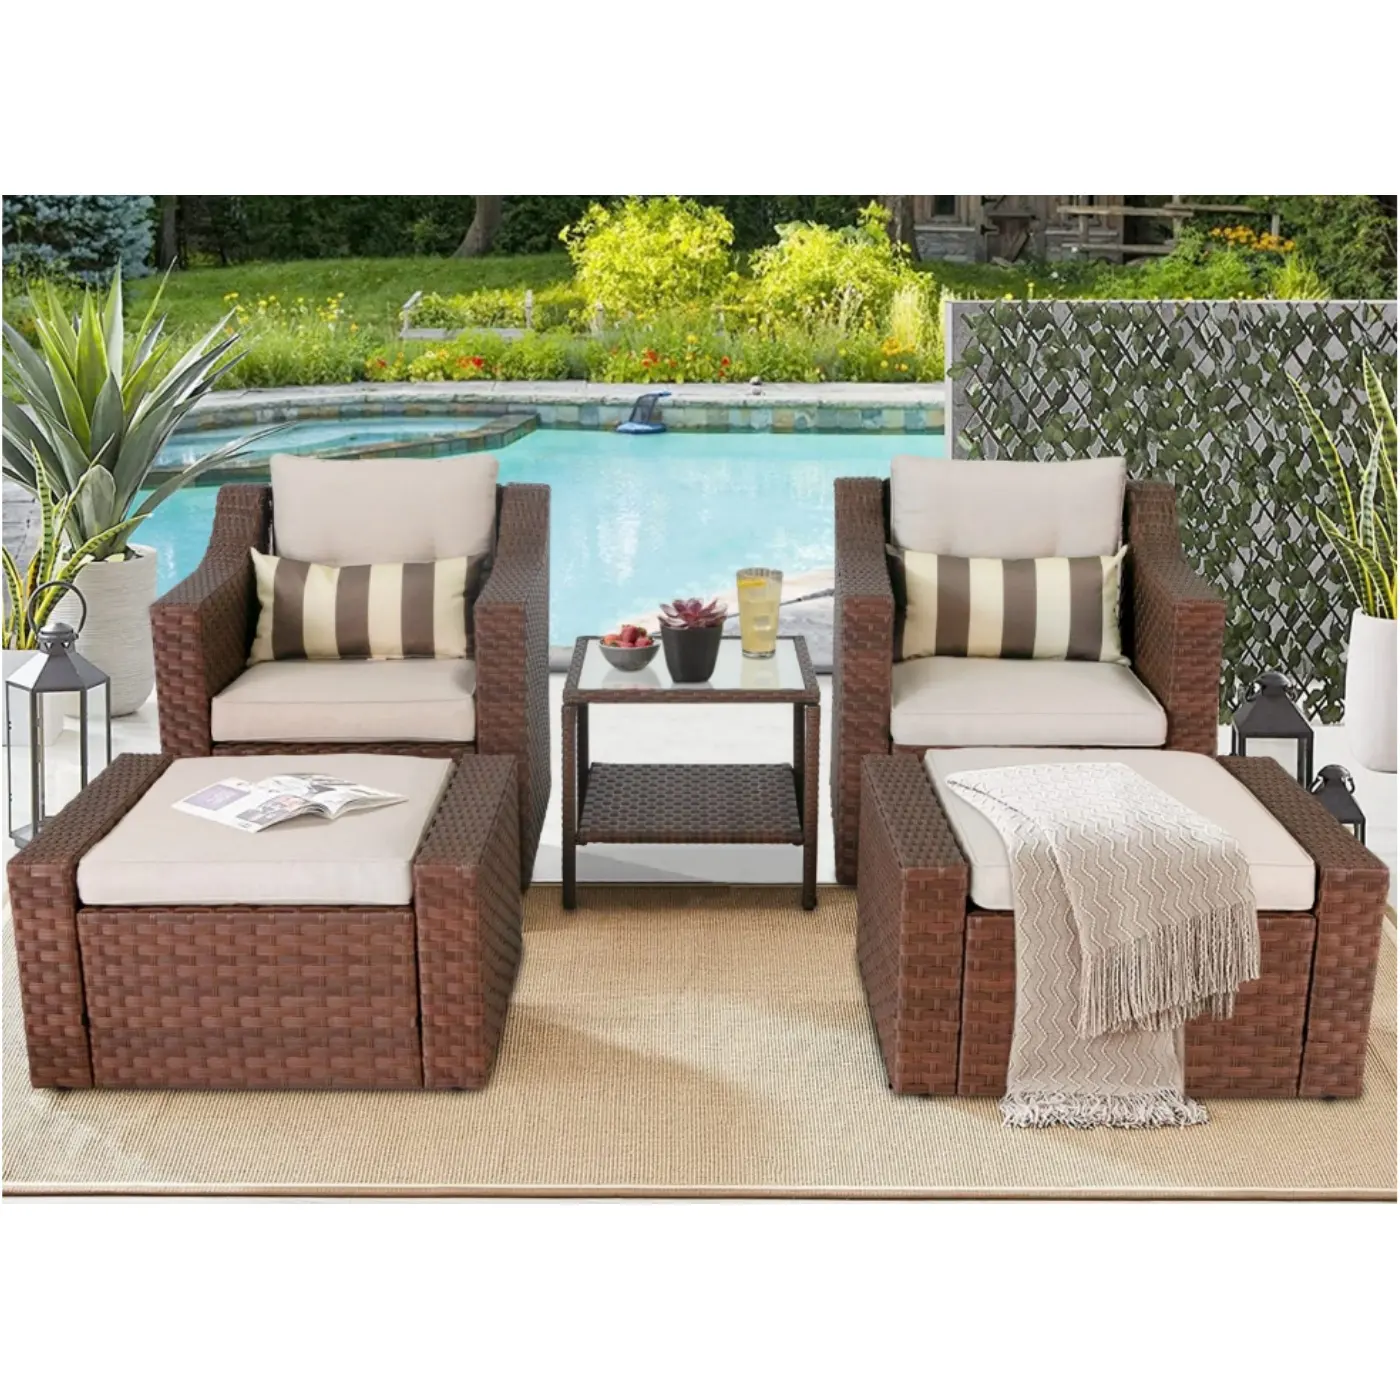 5pcs bistro set Outdoor Wicker Furniture Sets Garden Sofa Lounge Sunbed In Stock